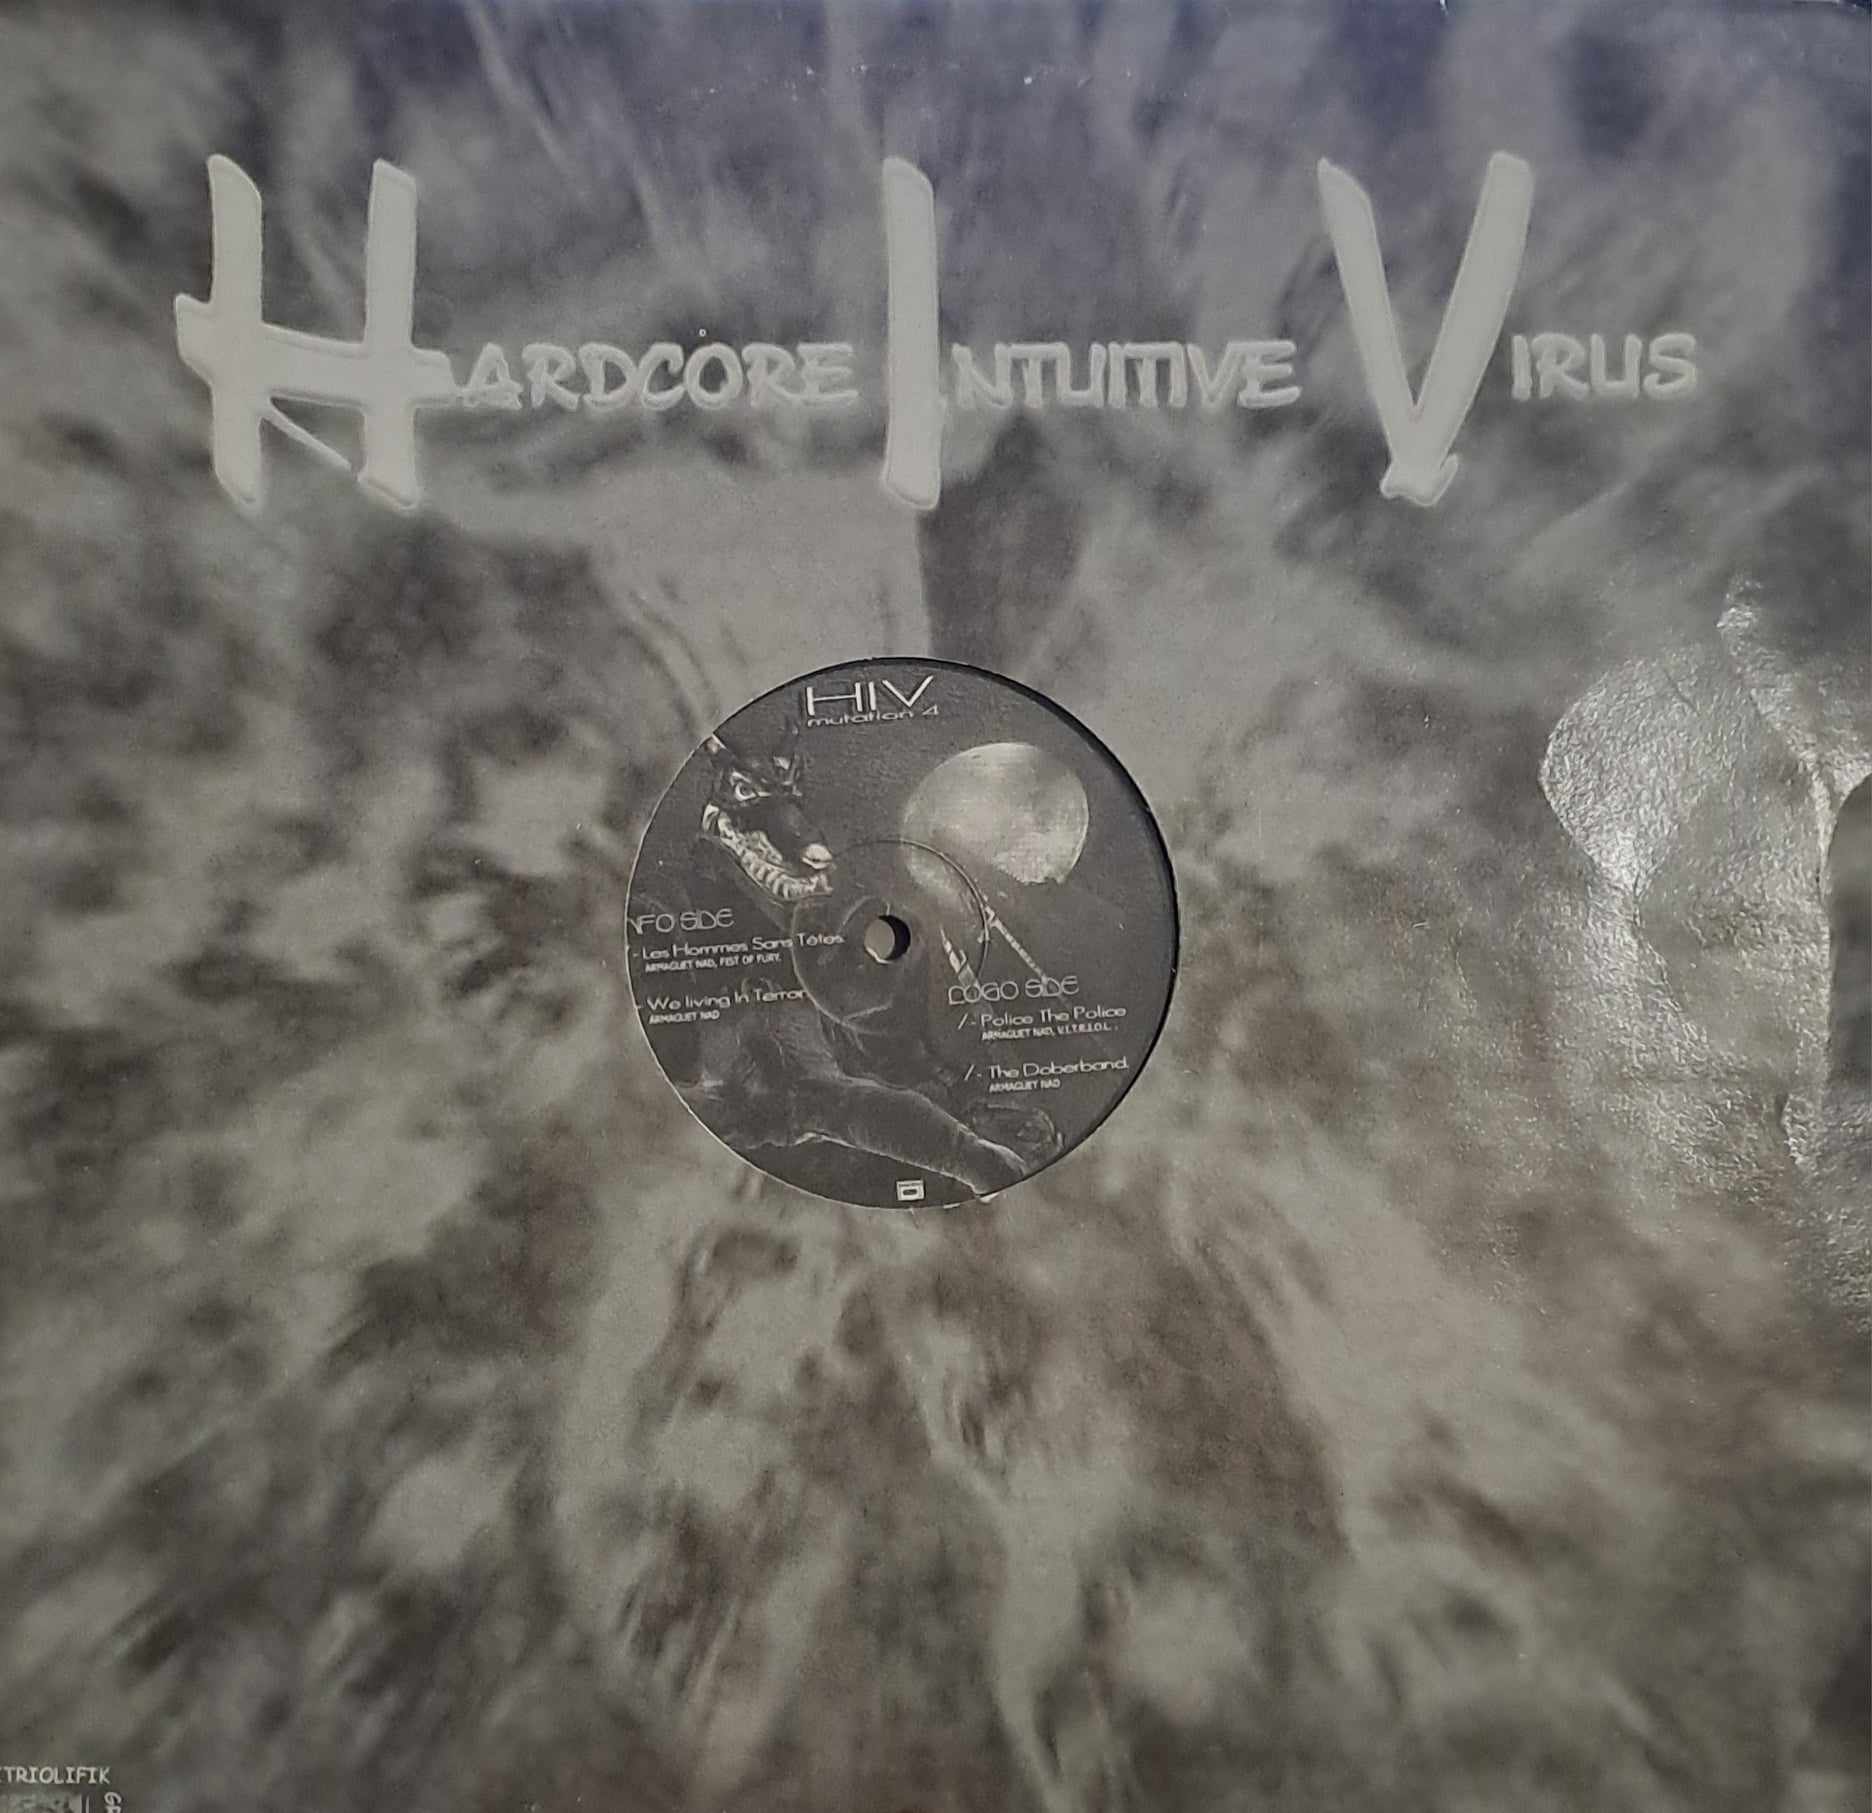 Hardcore Intuitive Virus 04 - vinyle hardcore